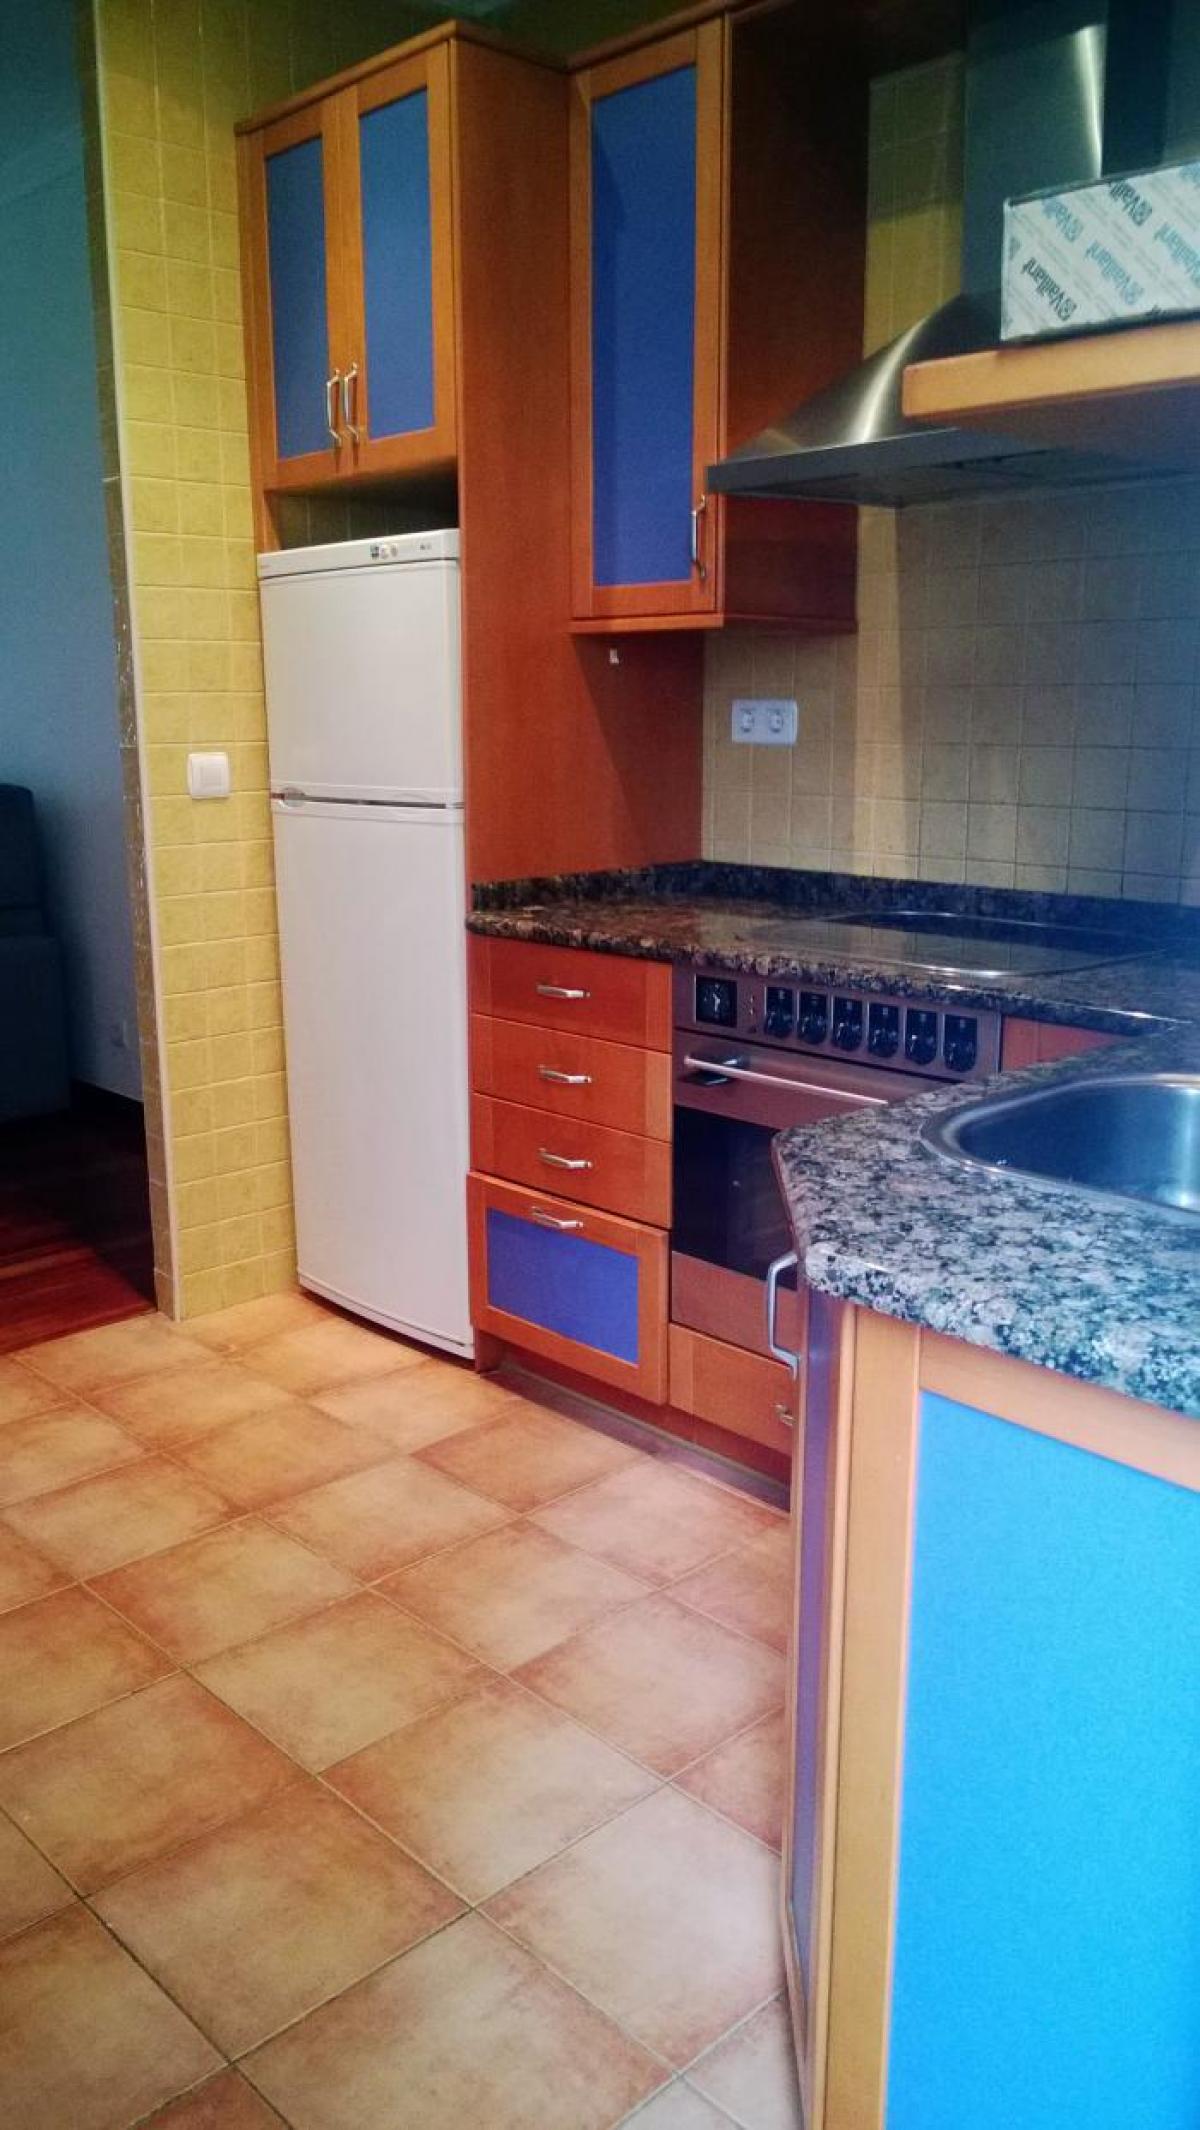 Picture of Apartment For Rent in San Sebastian, Asturias, Spain